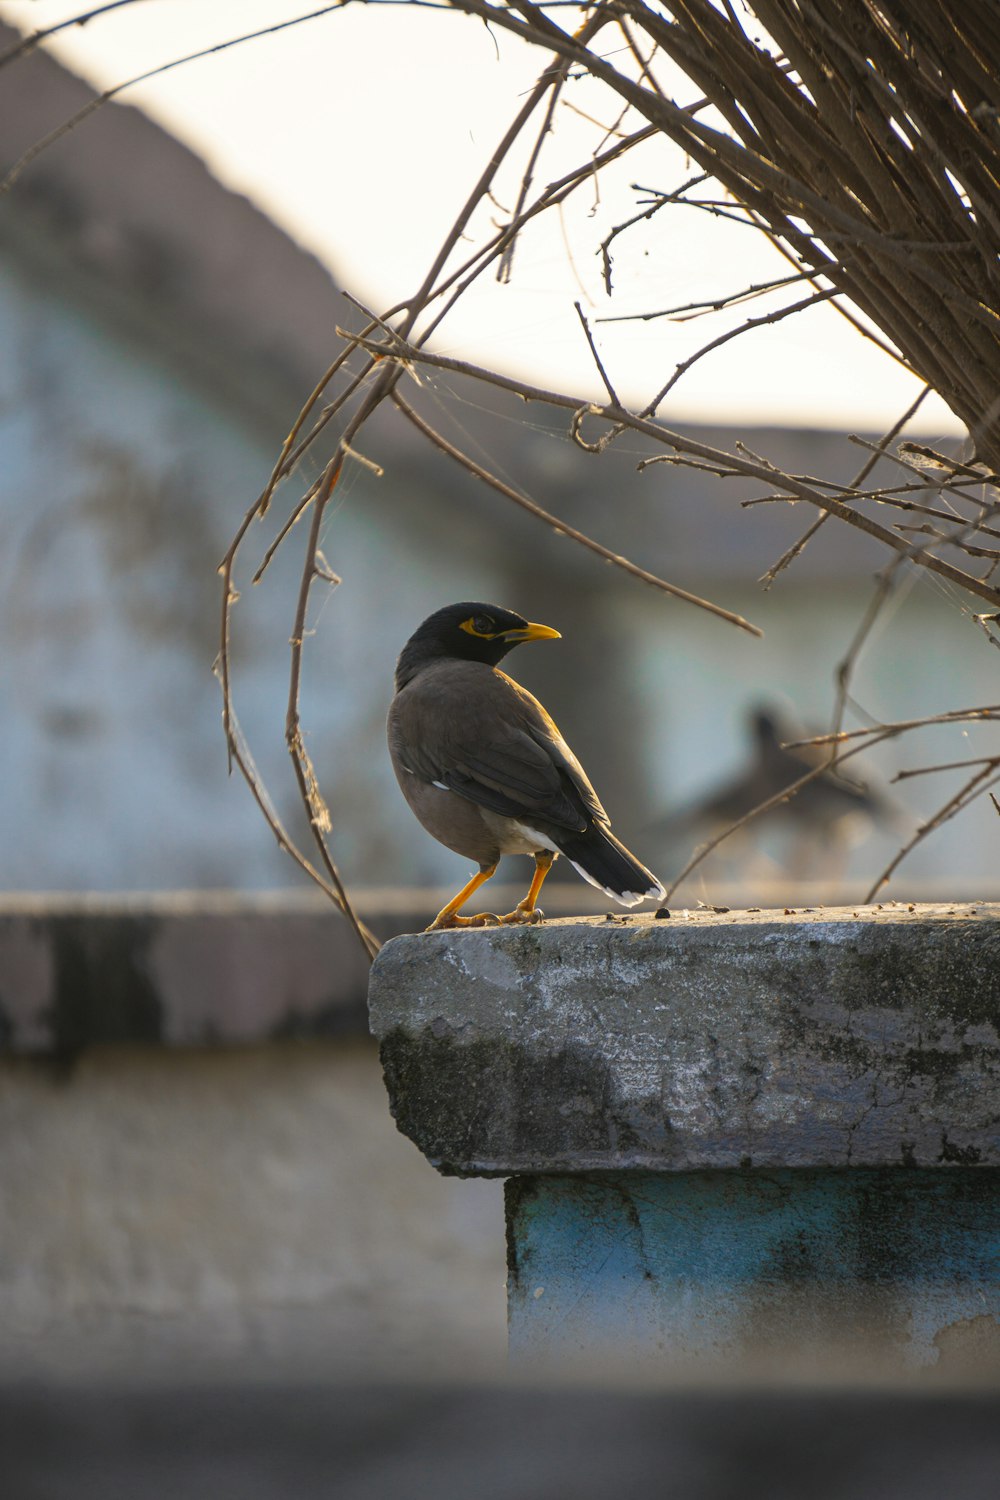 a bird sitting on a ledge next to a bush